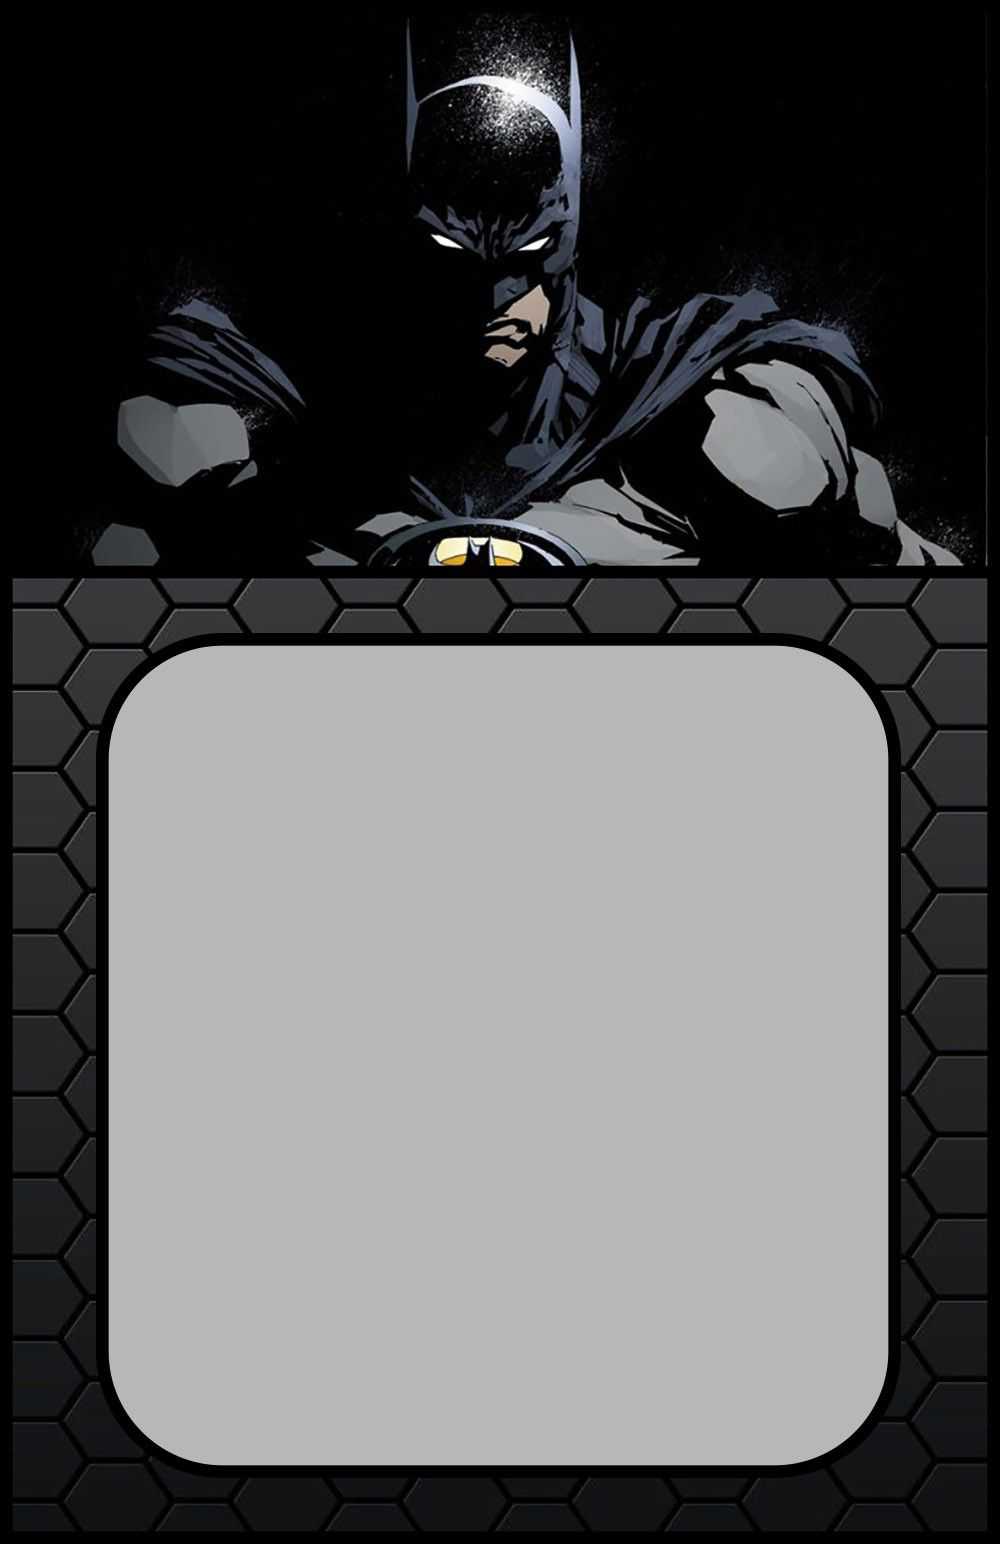 Printable Batman Invitation Card | Batman Invitations With Regard To Batman Birthday Card Template